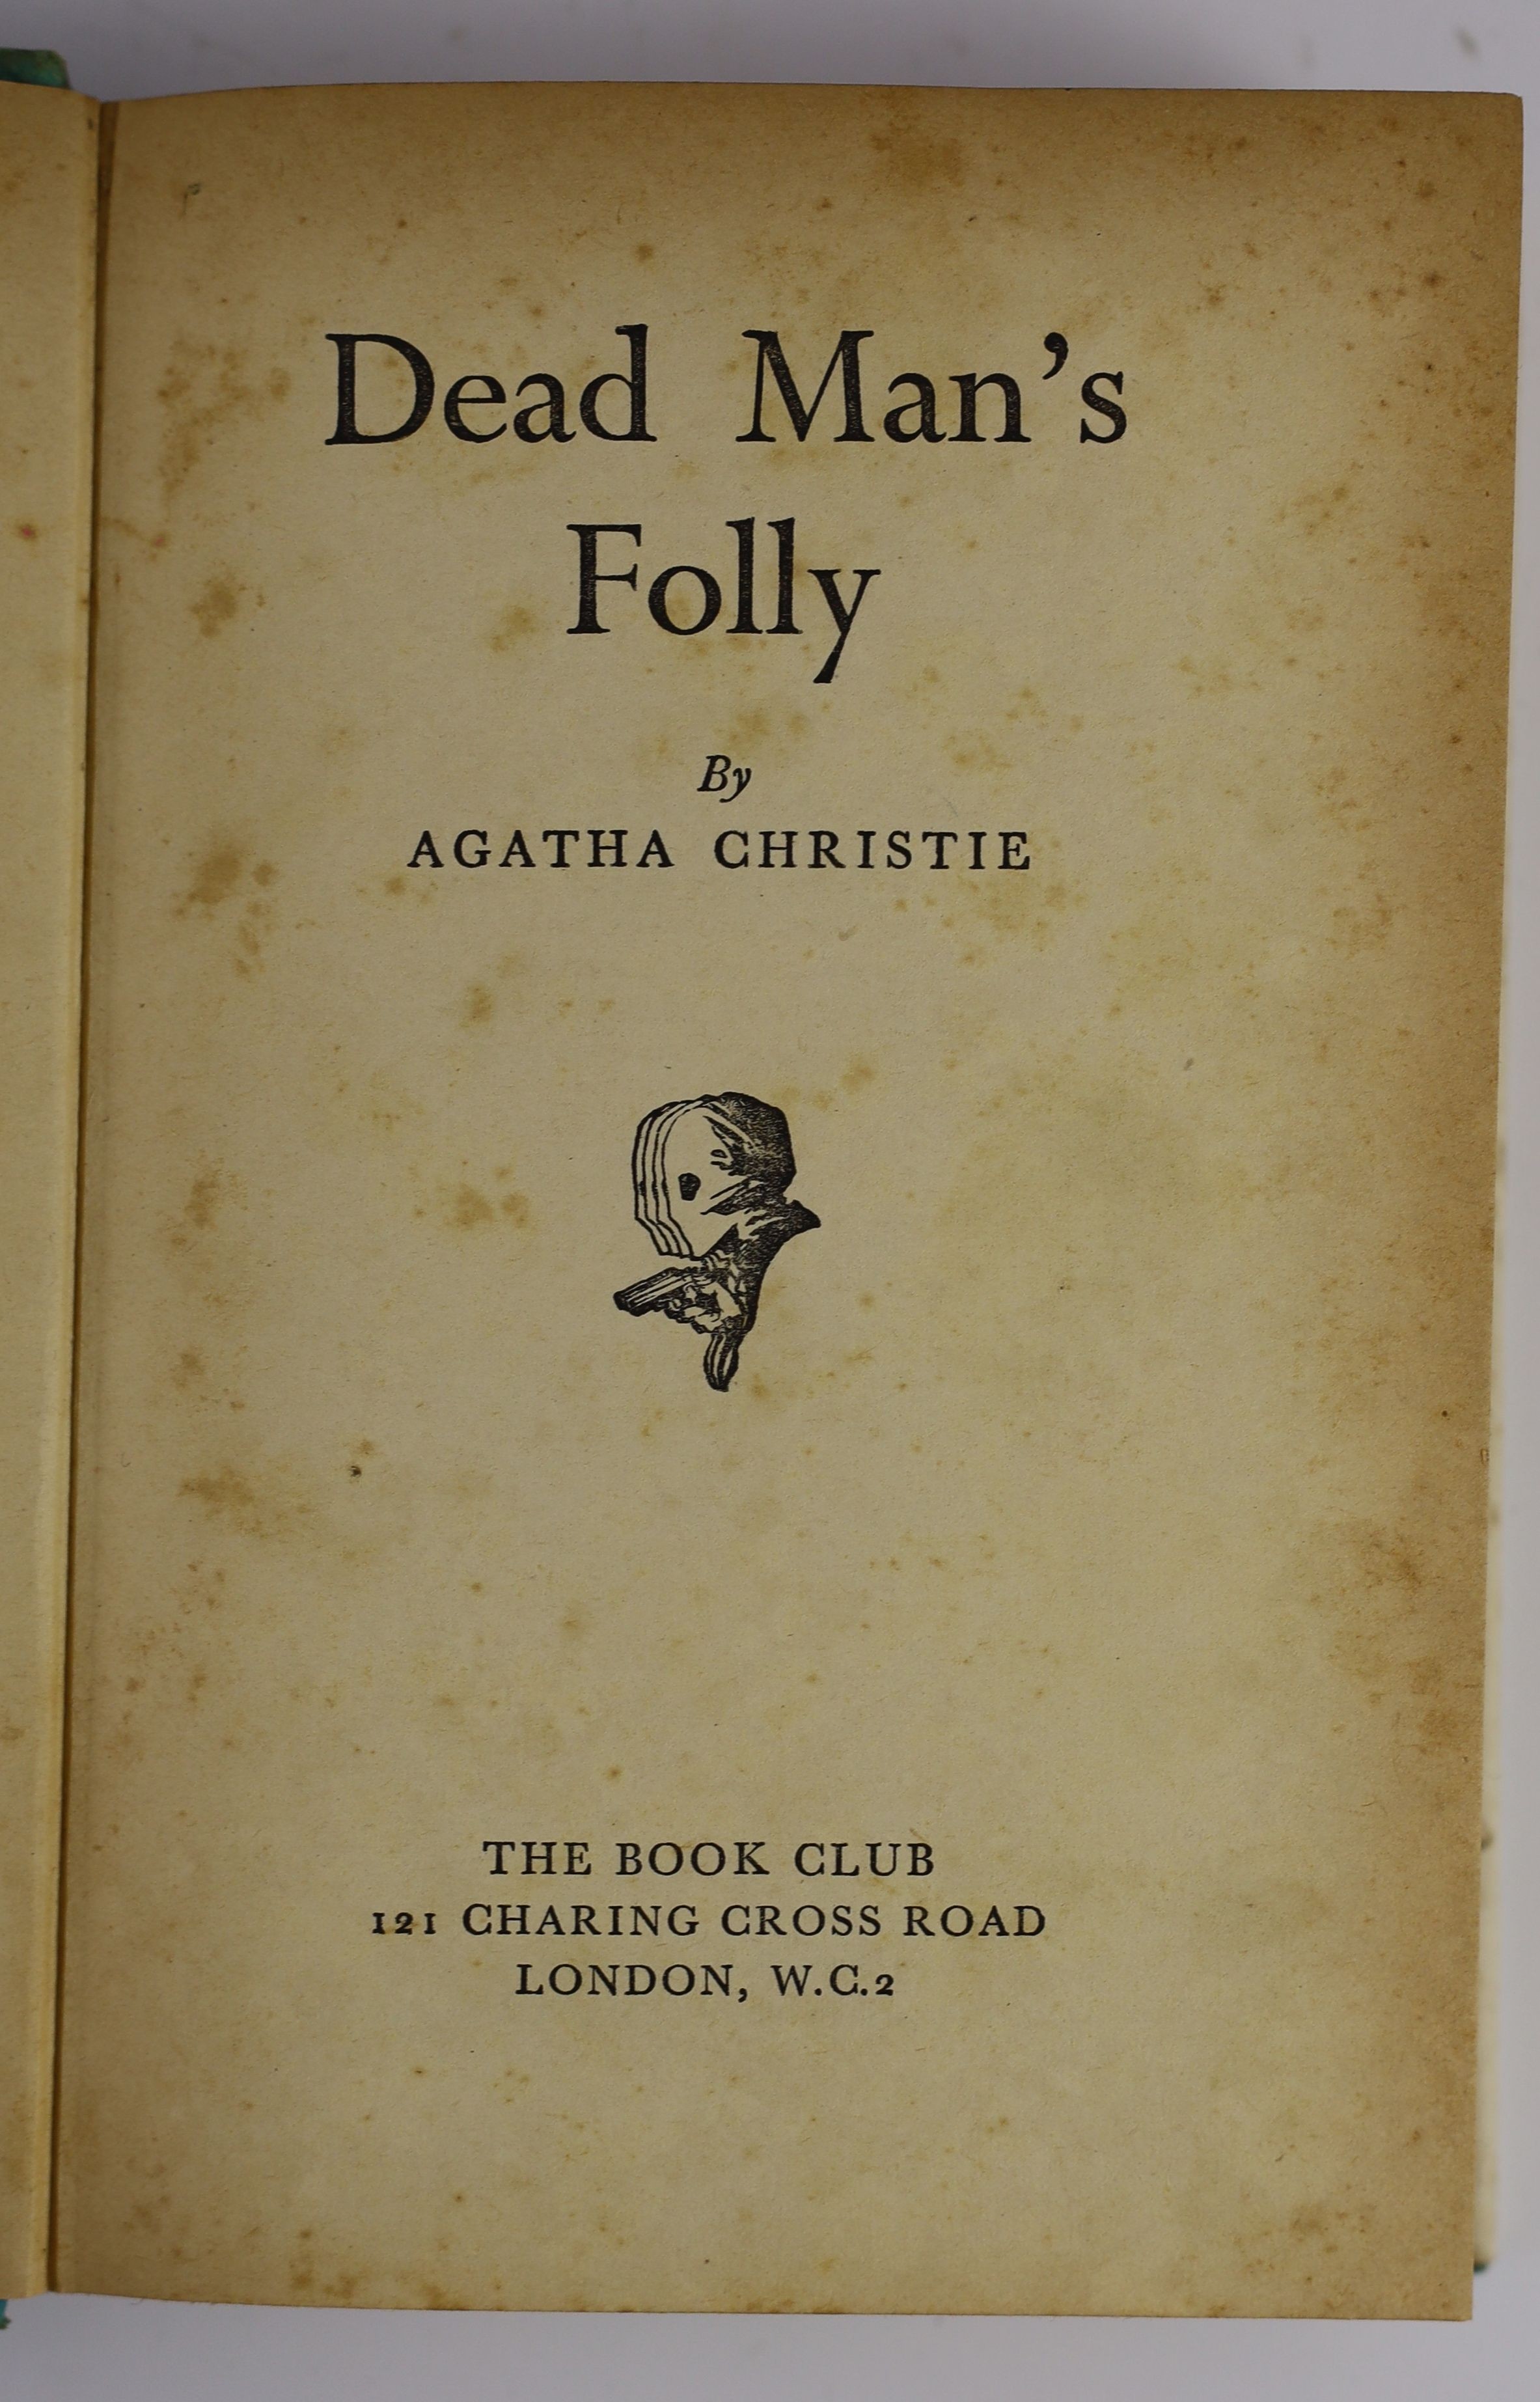 Christie, Agatha - Dead Man's Folly, 1957